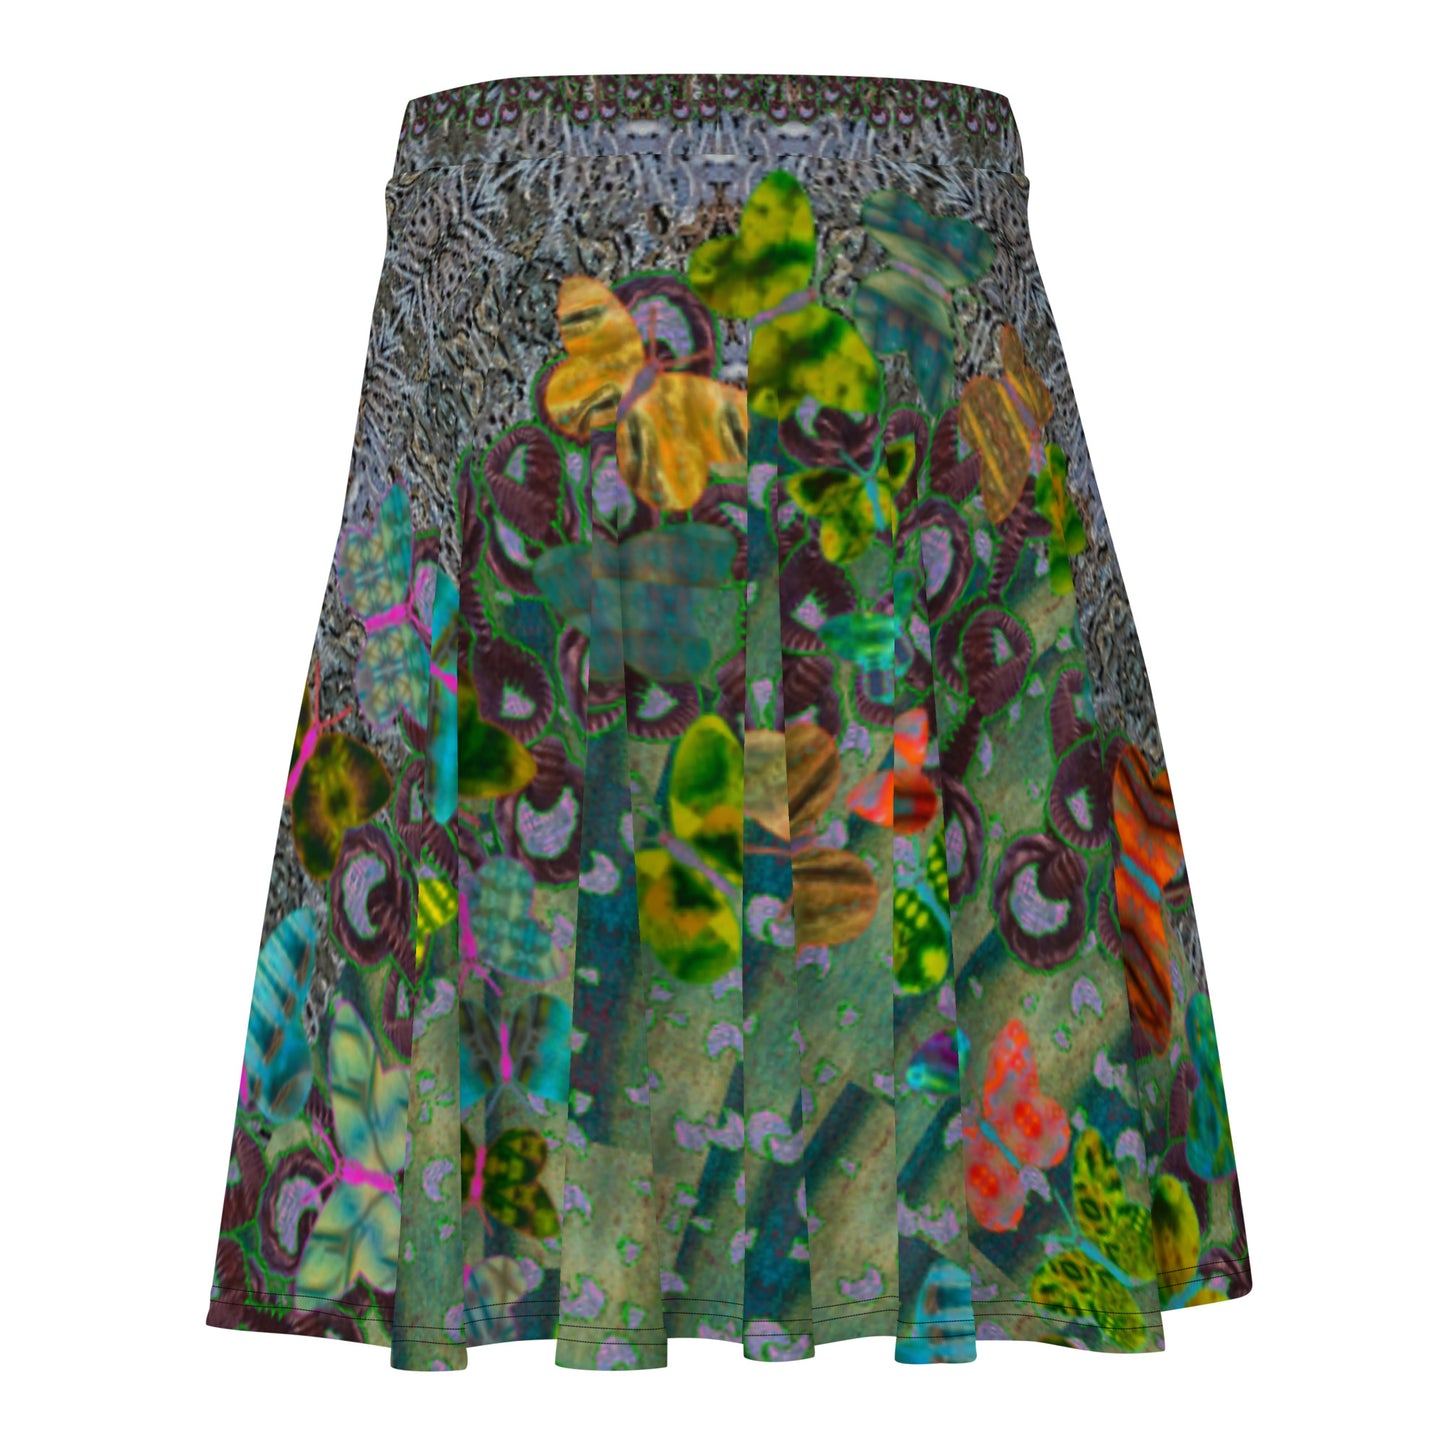 Skater Skirt (Her/They)(Butterfly Glade Shoal Solstice GNHV 8.4) RJSTH@Fabric#4 RJSTHw2021 RJS